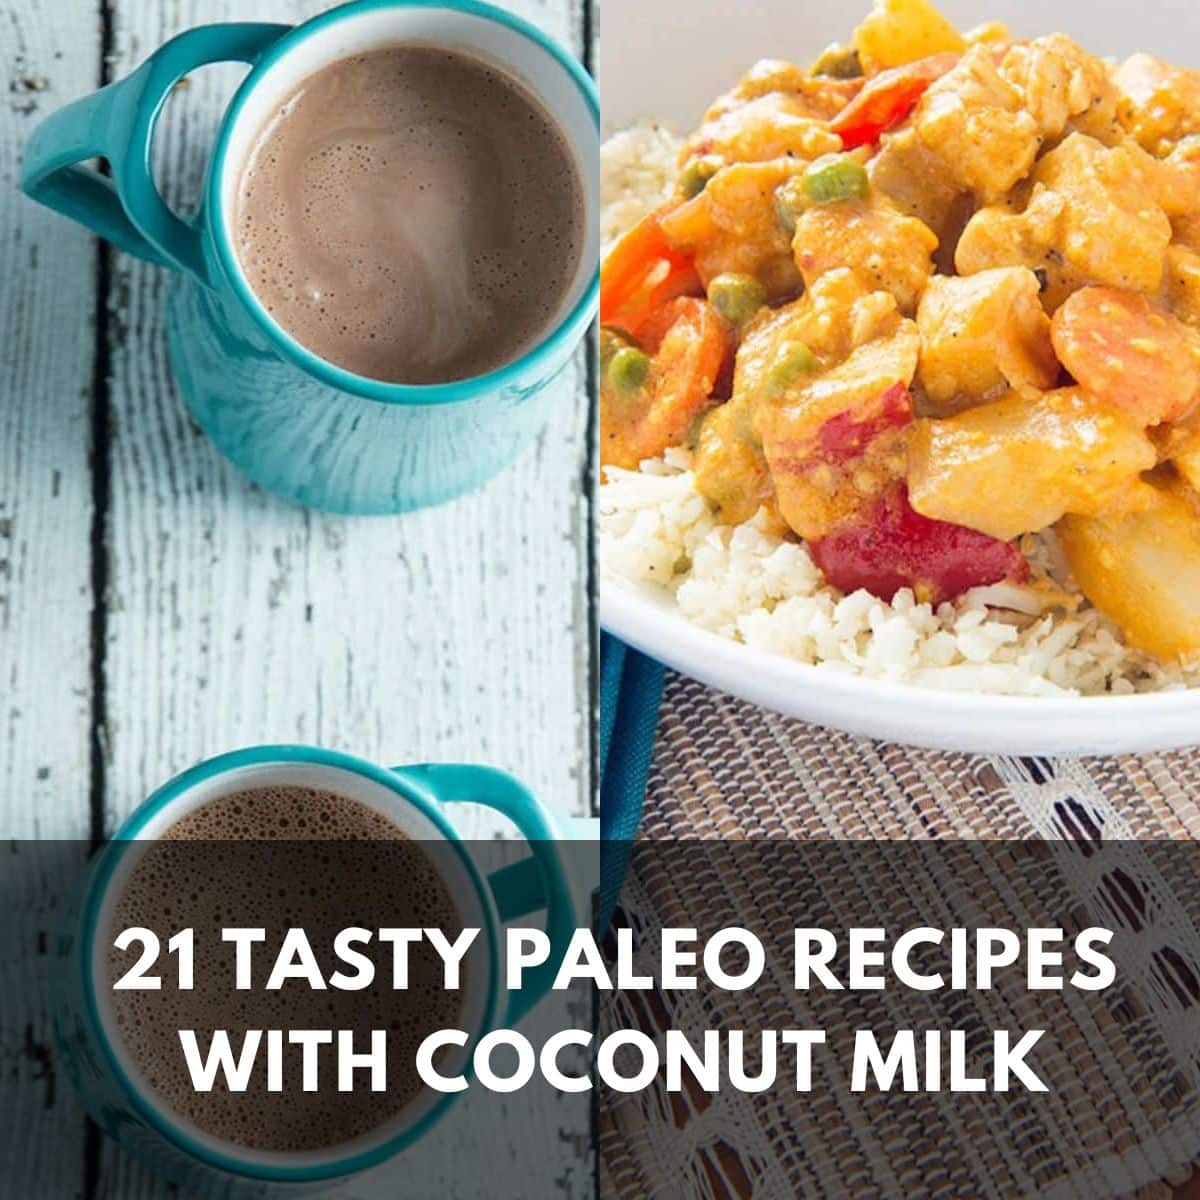 21 Tasty Paleo Recipes with Coconut Milk